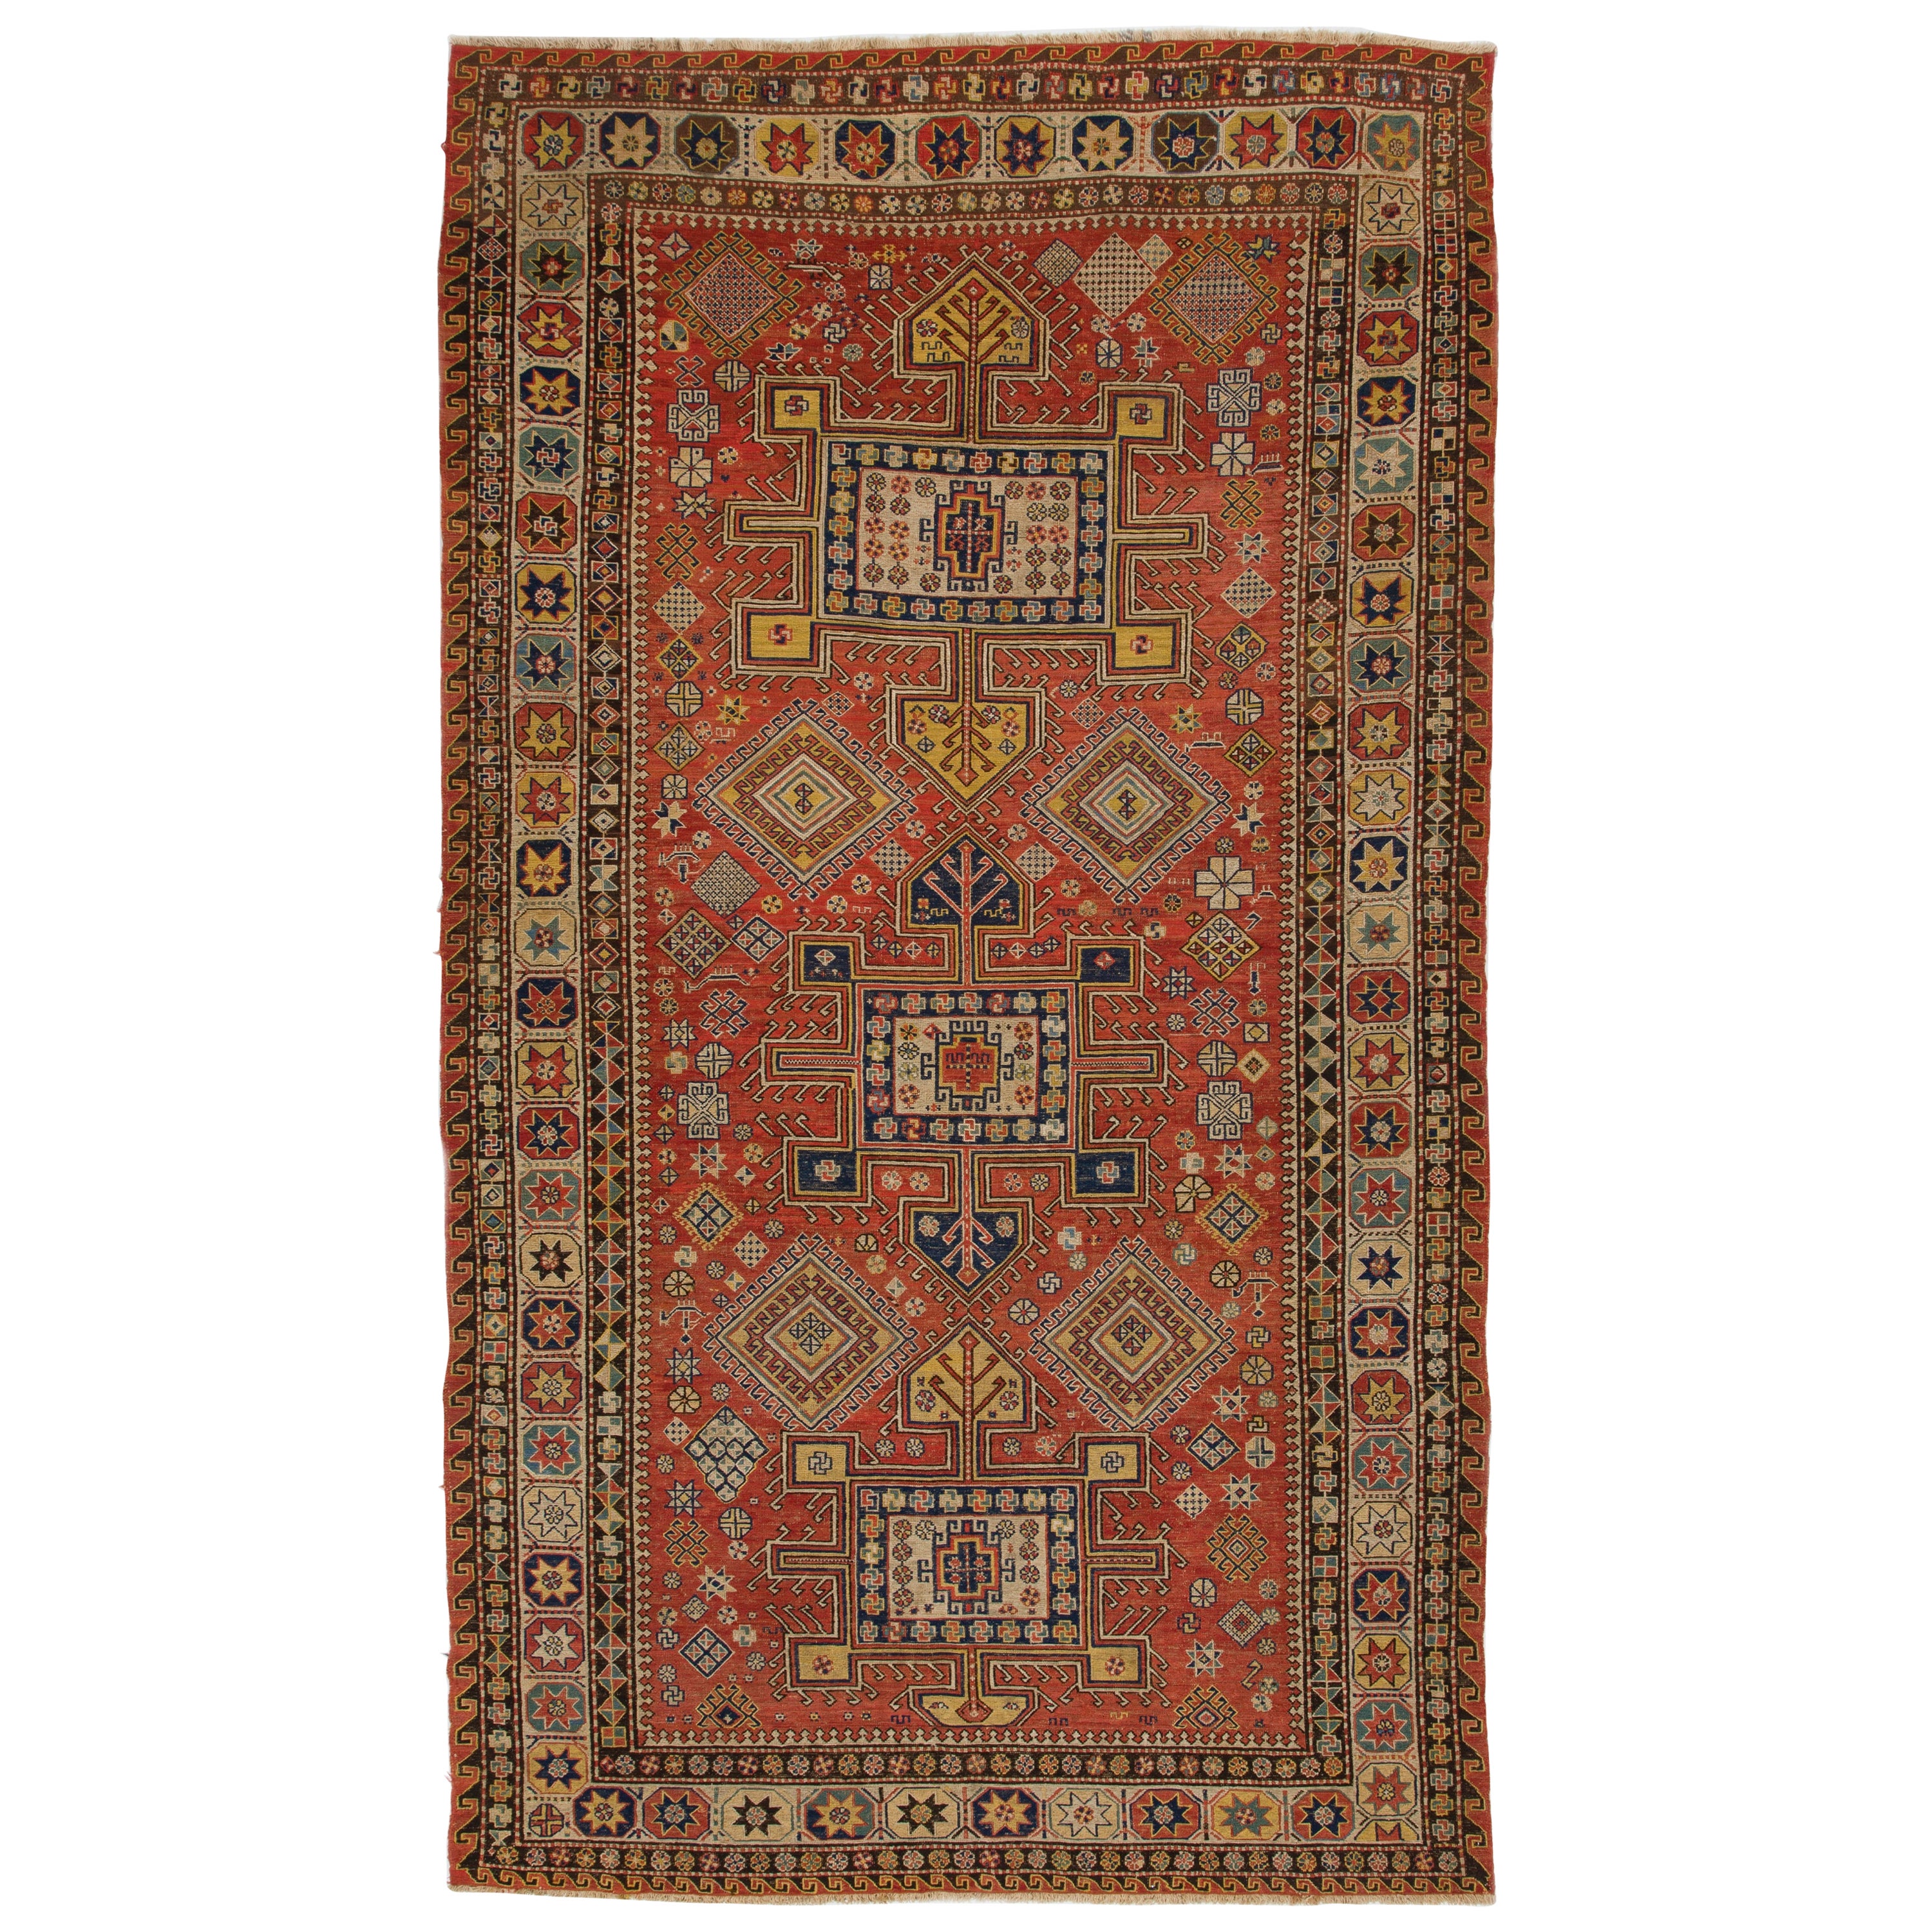 5.7x10 ft Antique Caucasian Konaghend Soumak Rug, circa 1875, Collectors Carpet